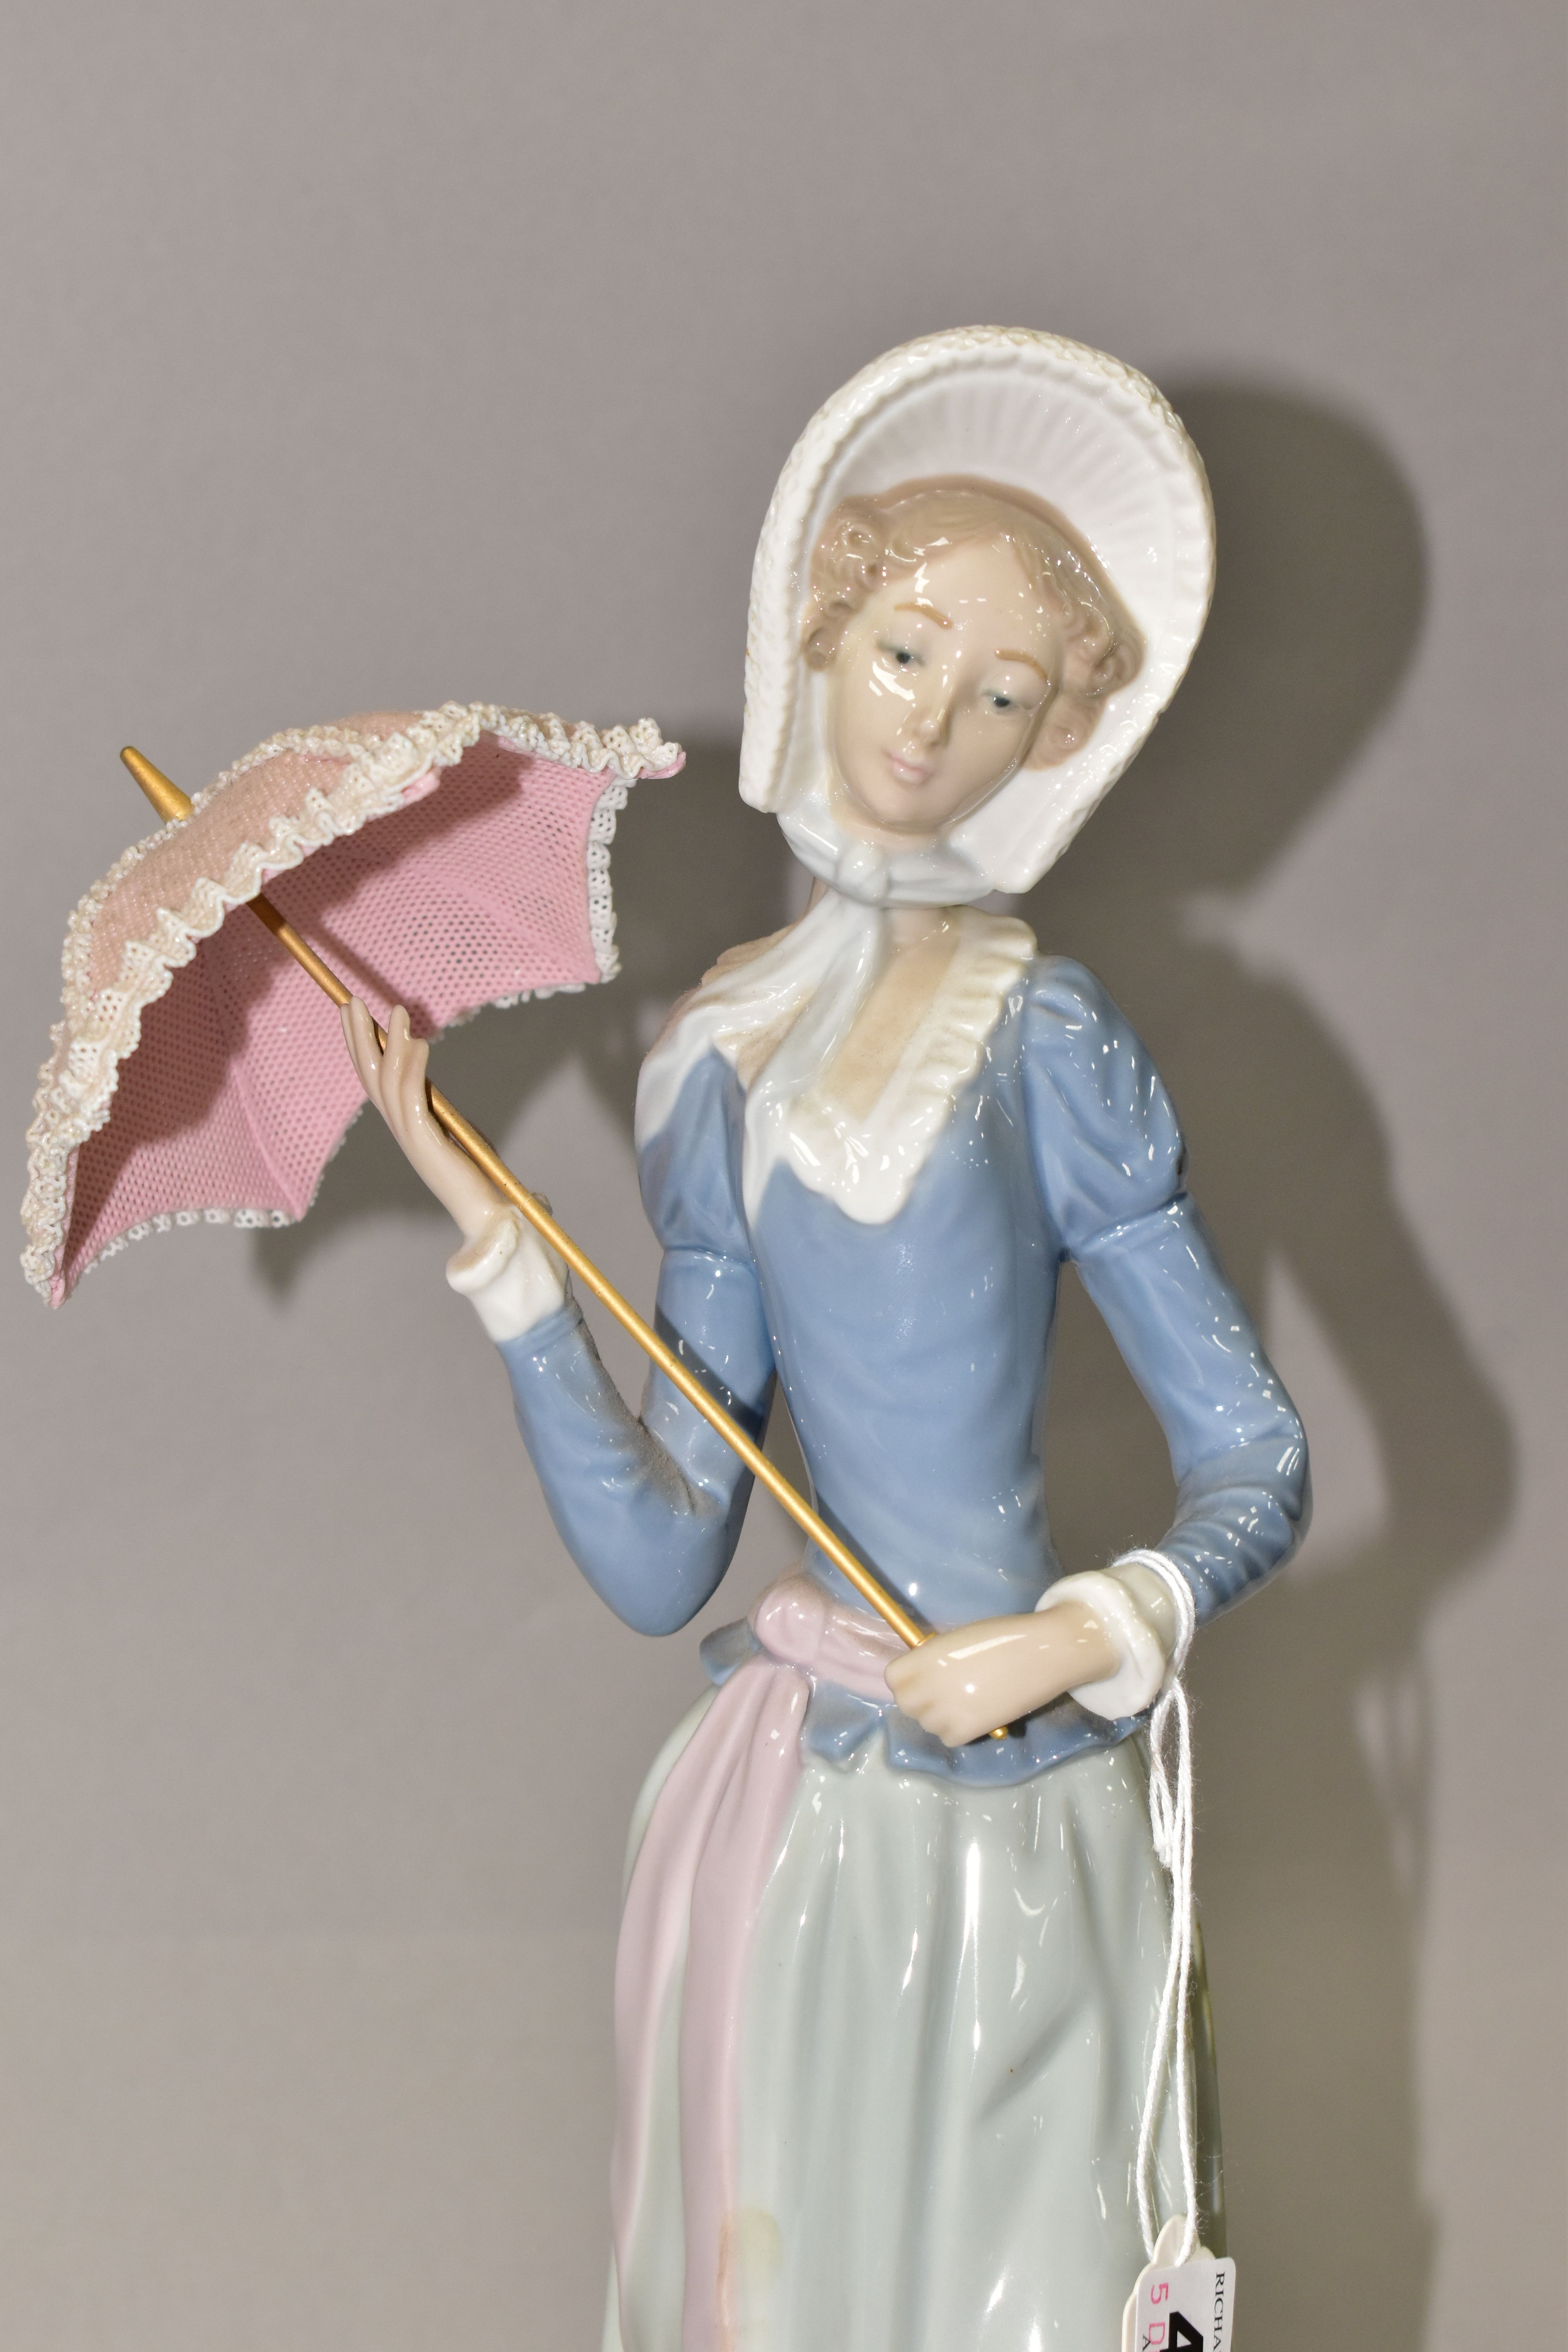 A LLADRO 'ARANJUEZ LITTLE LADY' FIGURINE, model no 4879, sculptor Vincente Martinez, introduced in - Image 2 of 6